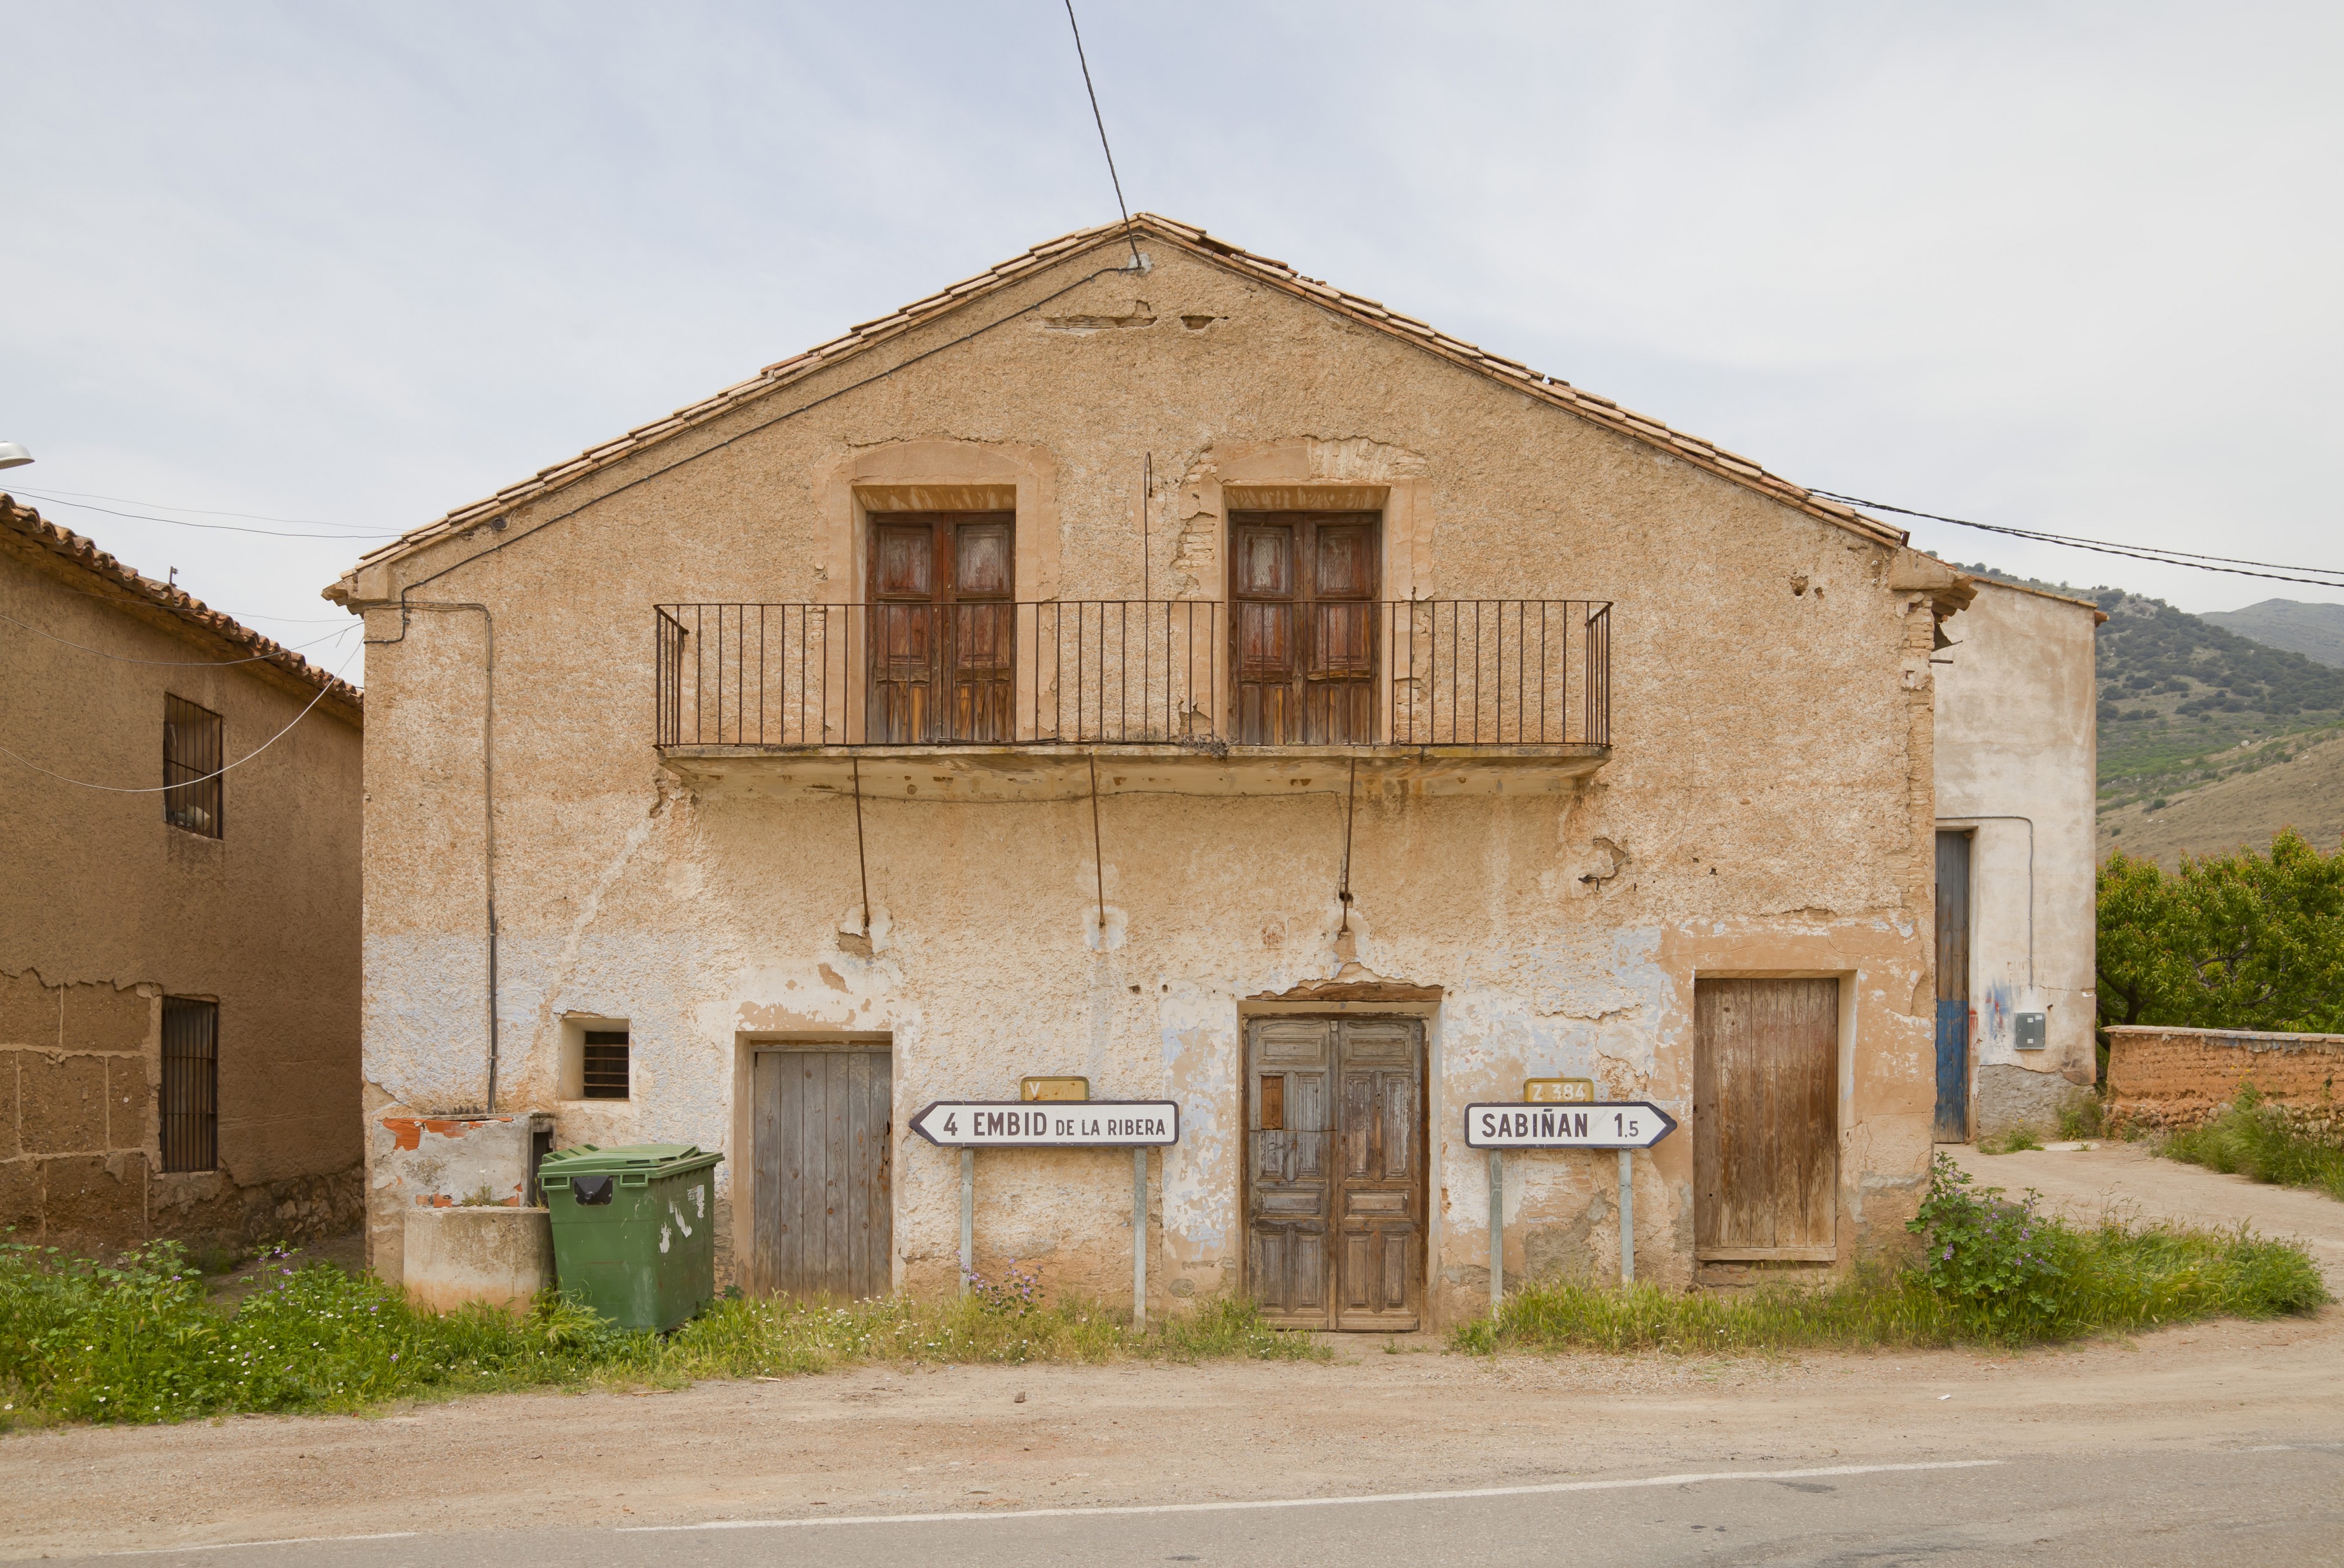 Casa abandonada, Paracuellos, España 2012-05-19, DD 01